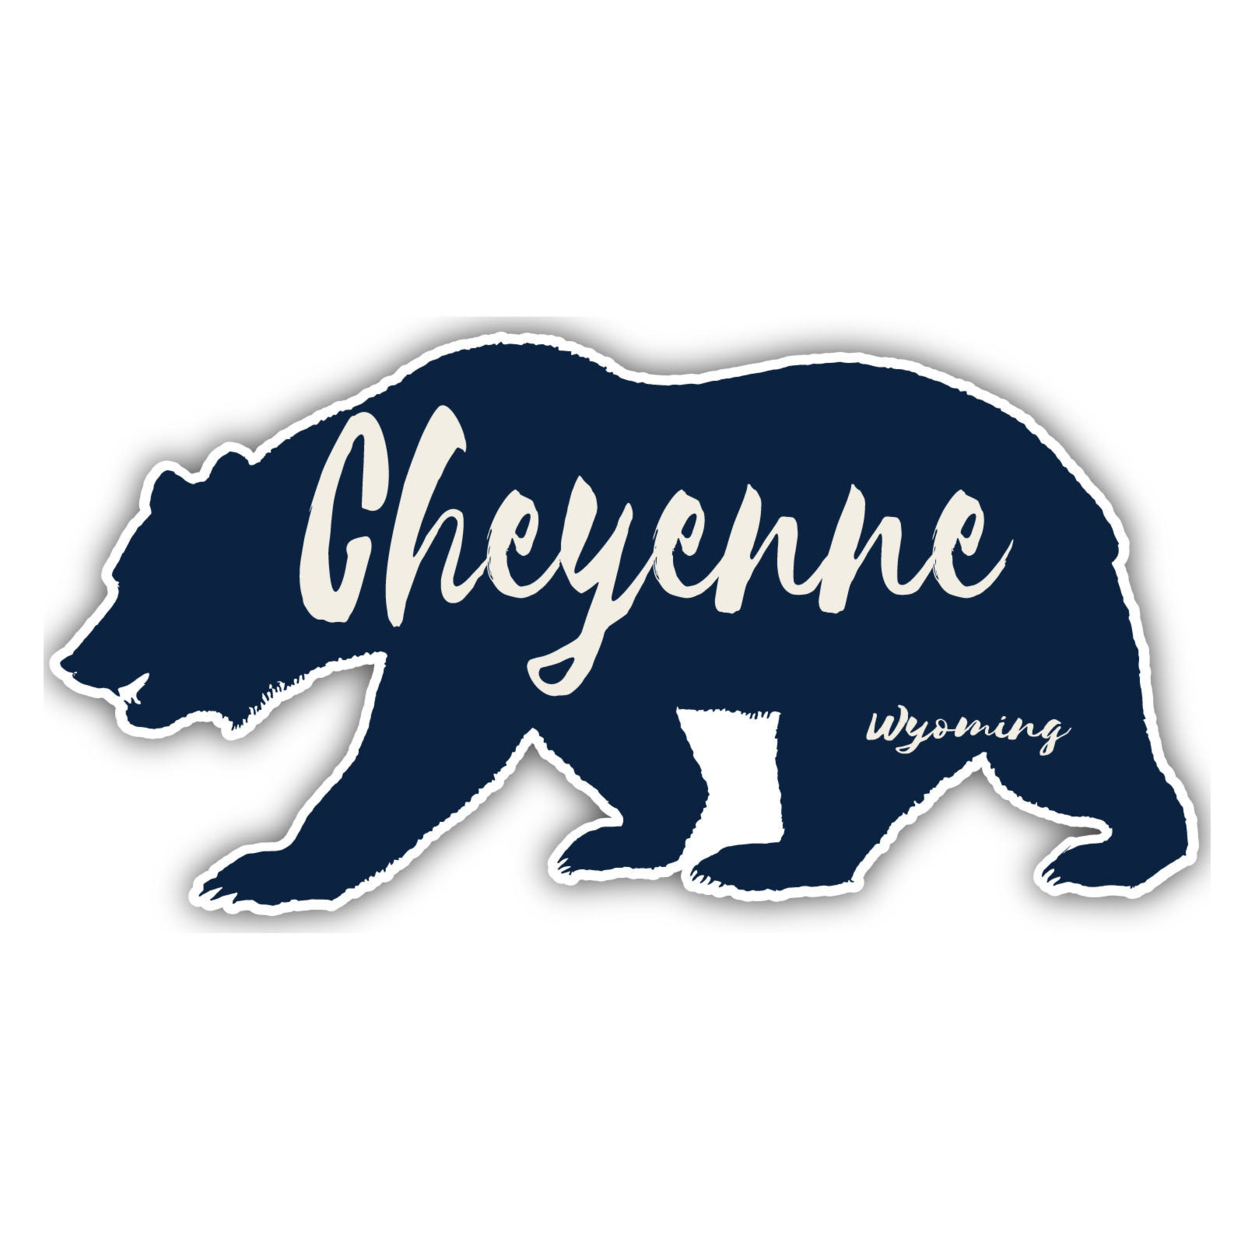 Cheyenne Wyoming Souvenir Decorative Stickers (Choose Theme And Size) - Single Unit, 4-Inch, Bear